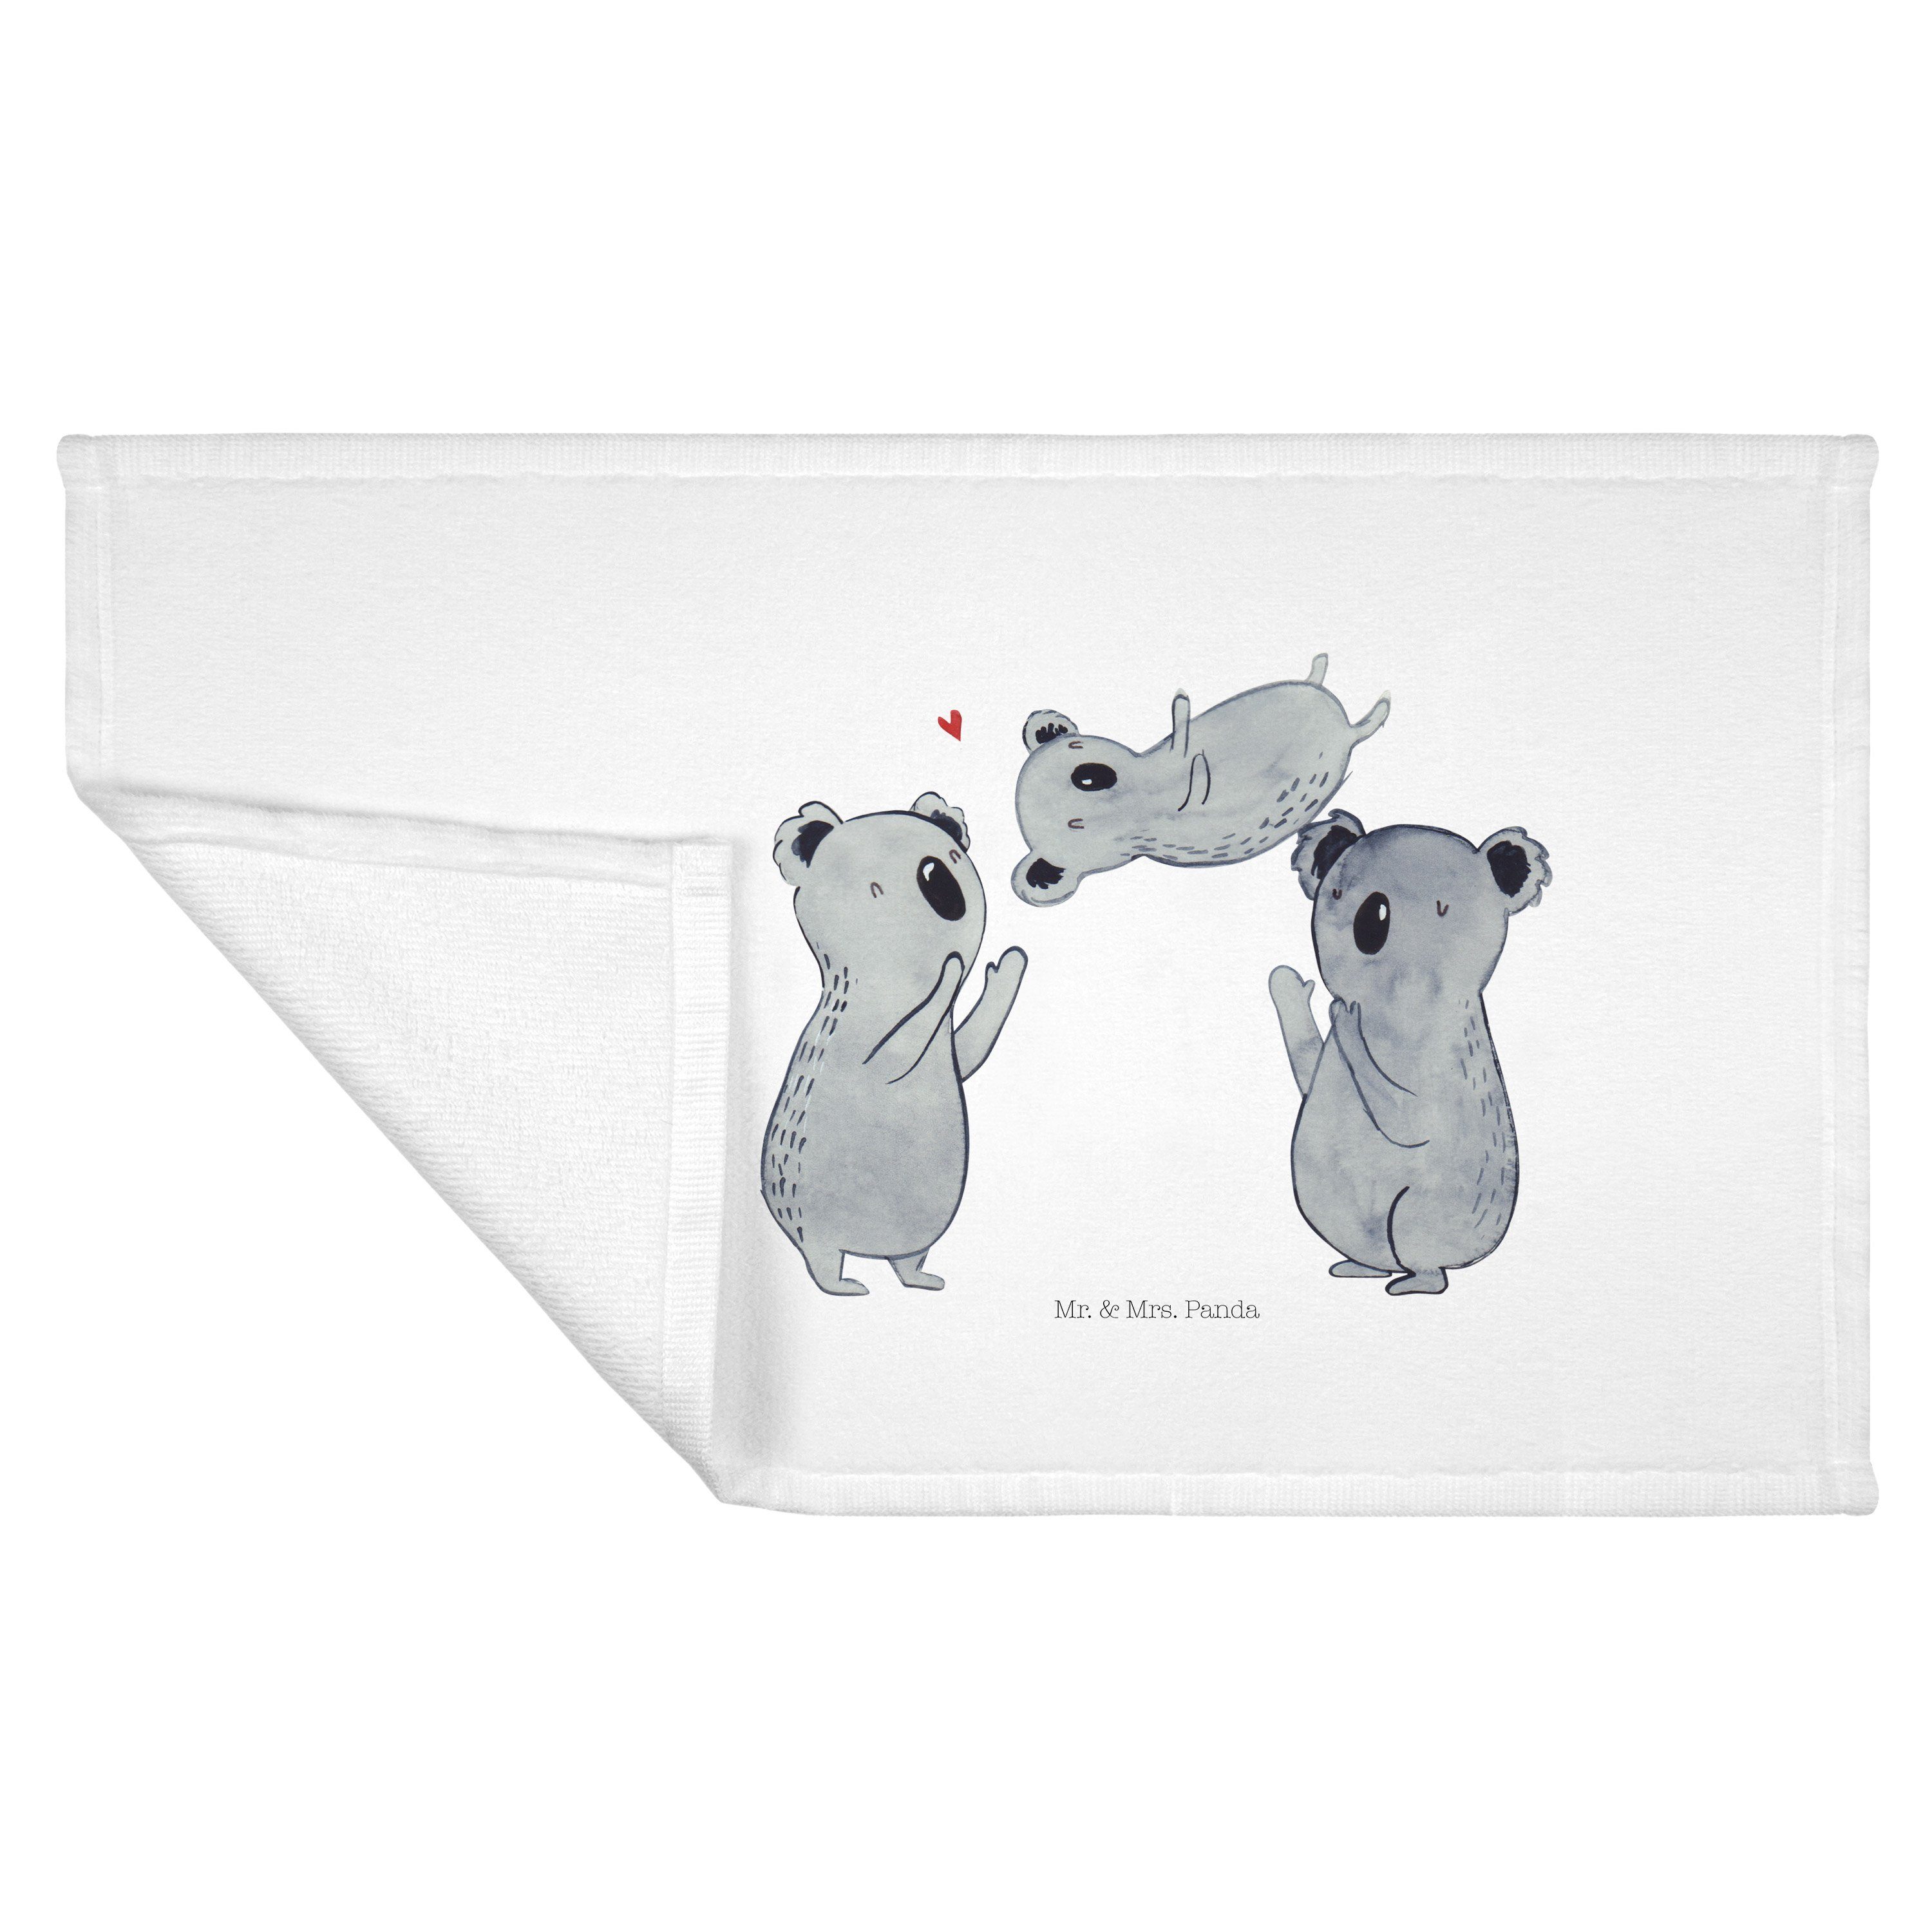 Mr. & - Bade, Mrs. Handtuch, - Badezimmer, Baby, Geschenk, Koala Feiern (1-St) Panda Weiß Sich Handtuch